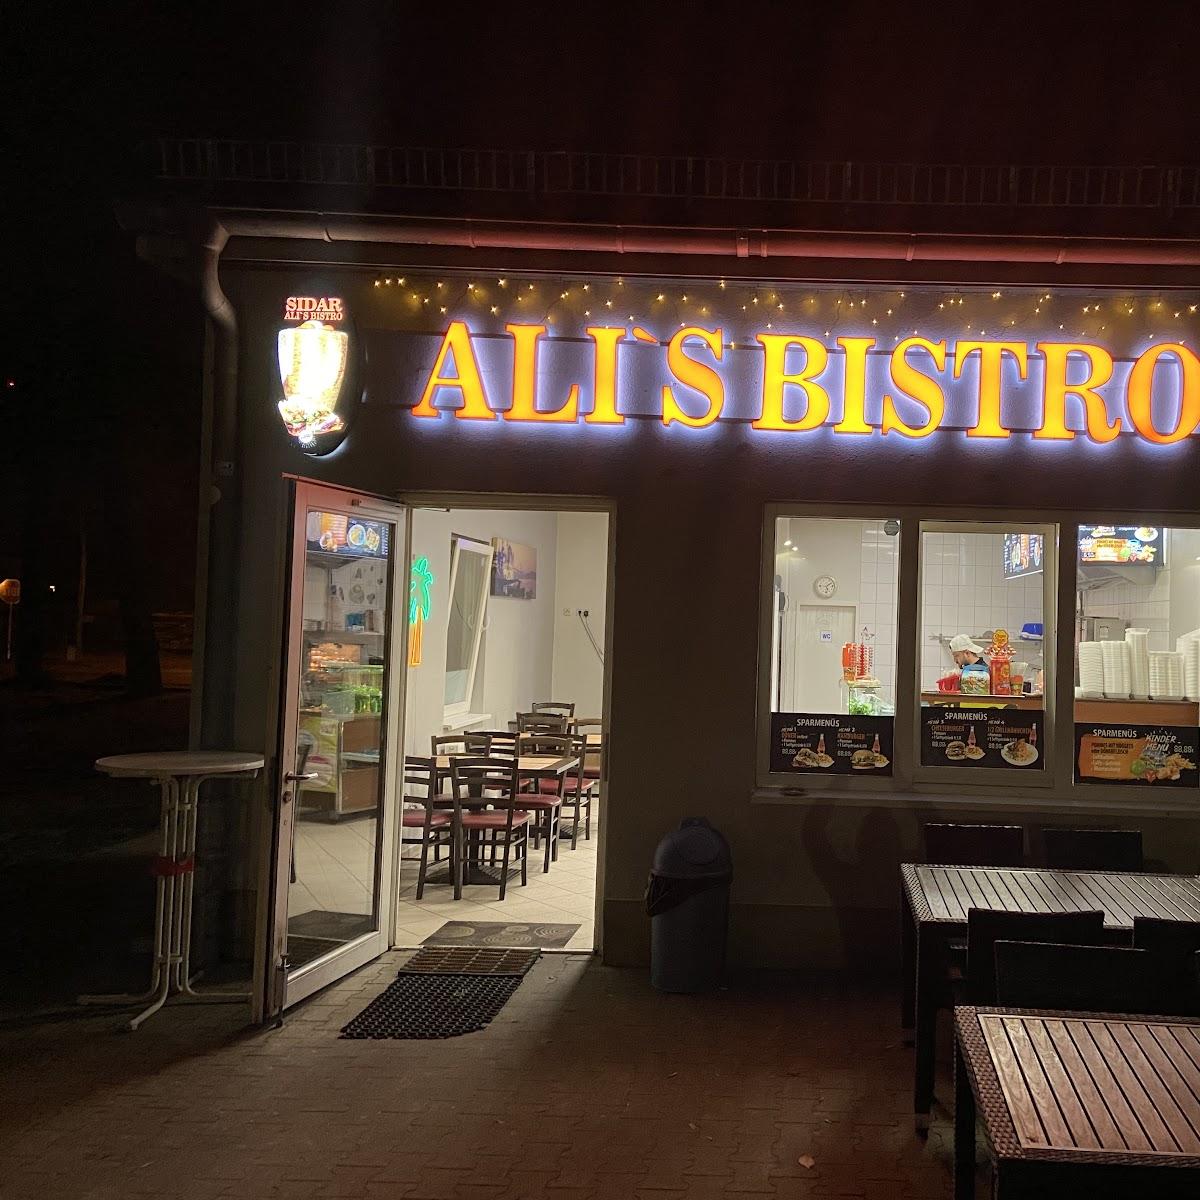 Restaurant "ALI’S BISTRO" in Neuhardenberg